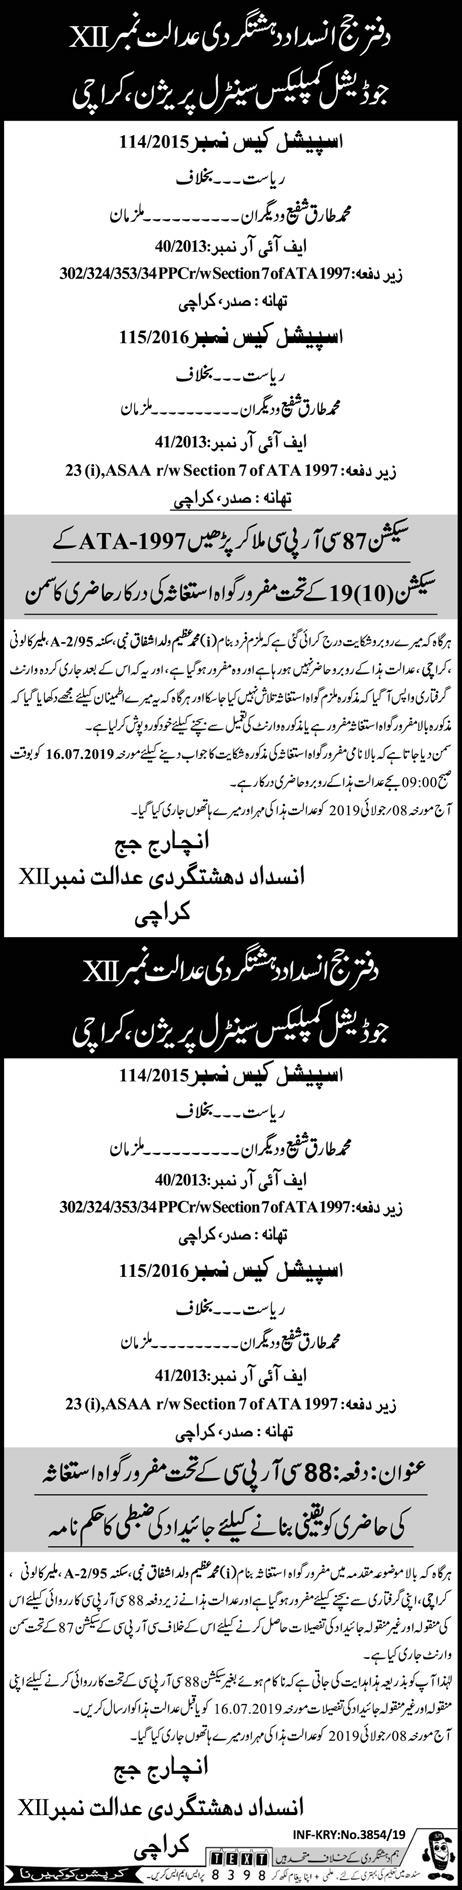 Pak Complaints-Muhammad Azeem | Malir Colony, Karachi | Mufror